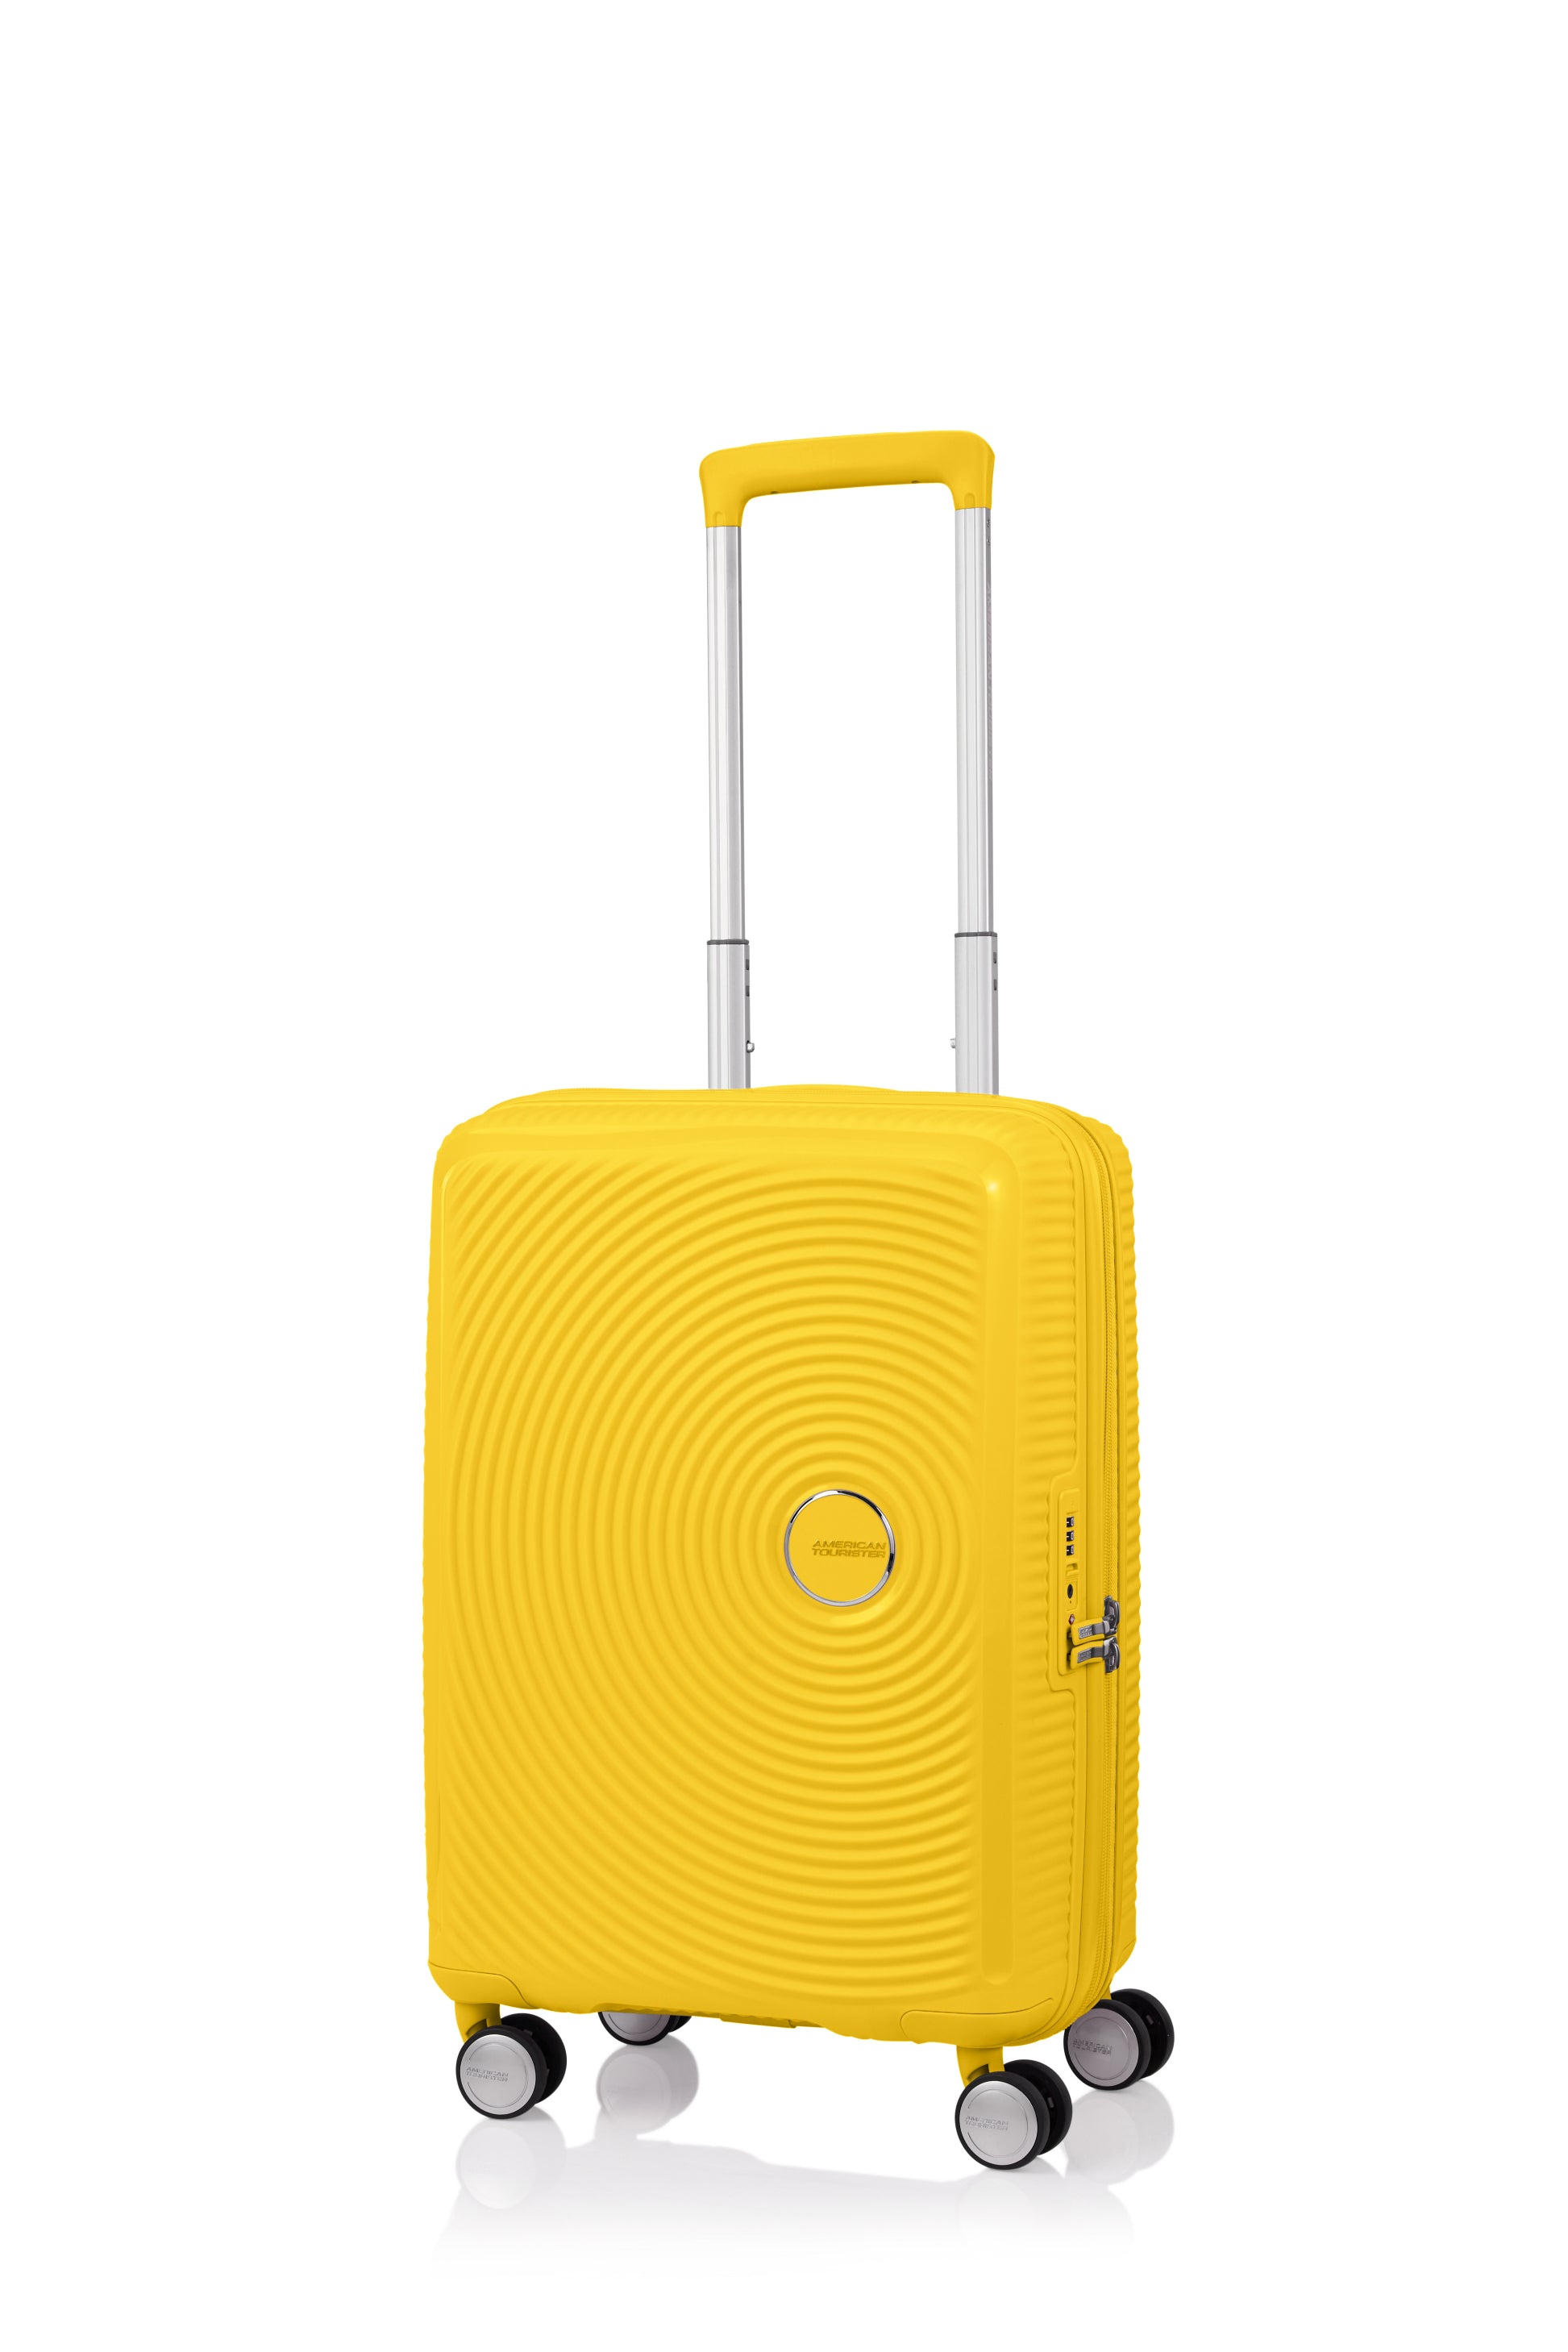 American Tourister - Curio 2.0 55cm Small Suitcase - Golden Yellow-6